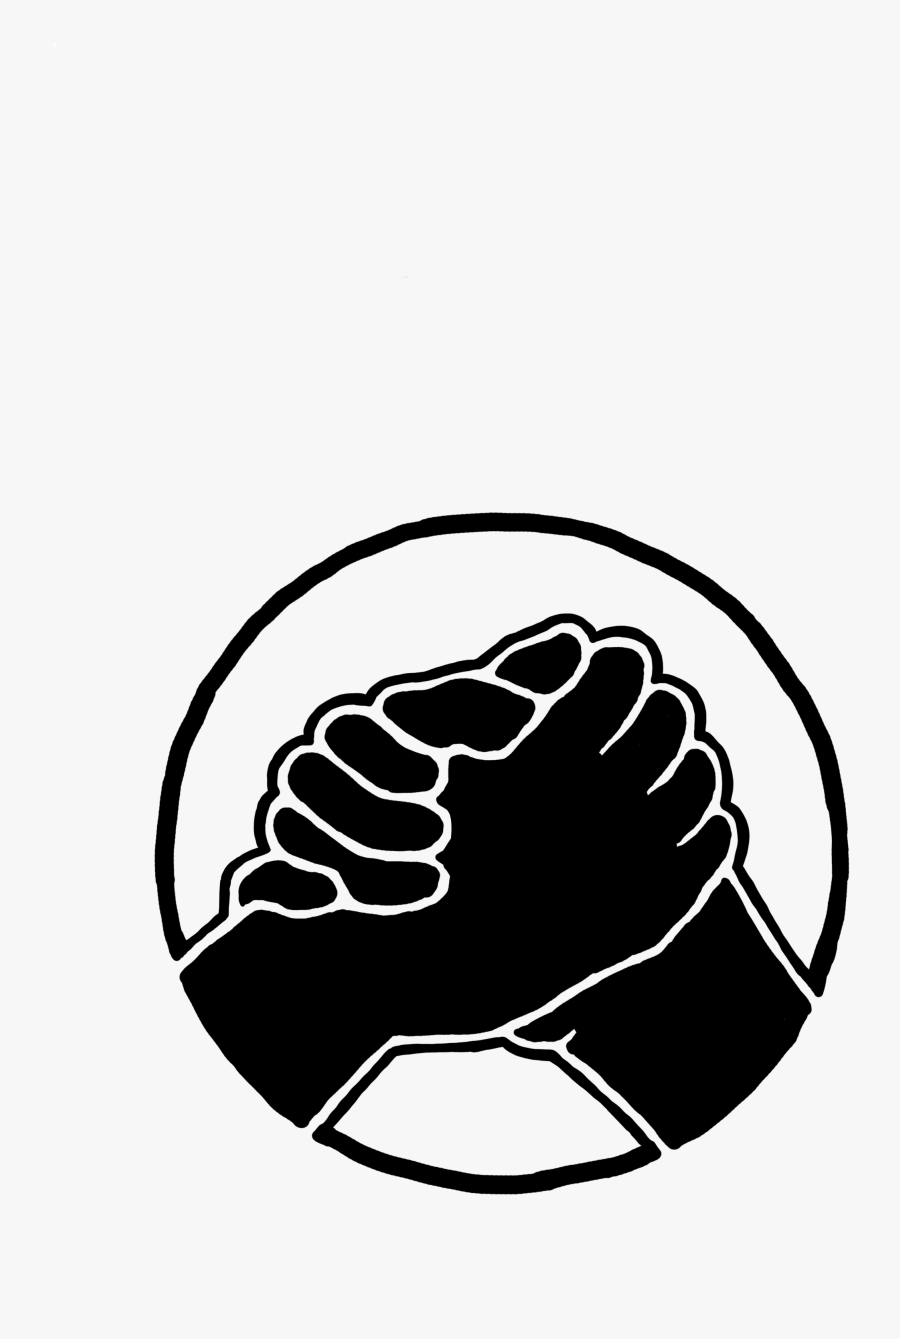 Black Student Union Logo Edited - Towson Black Student Union, Transparent Clipart